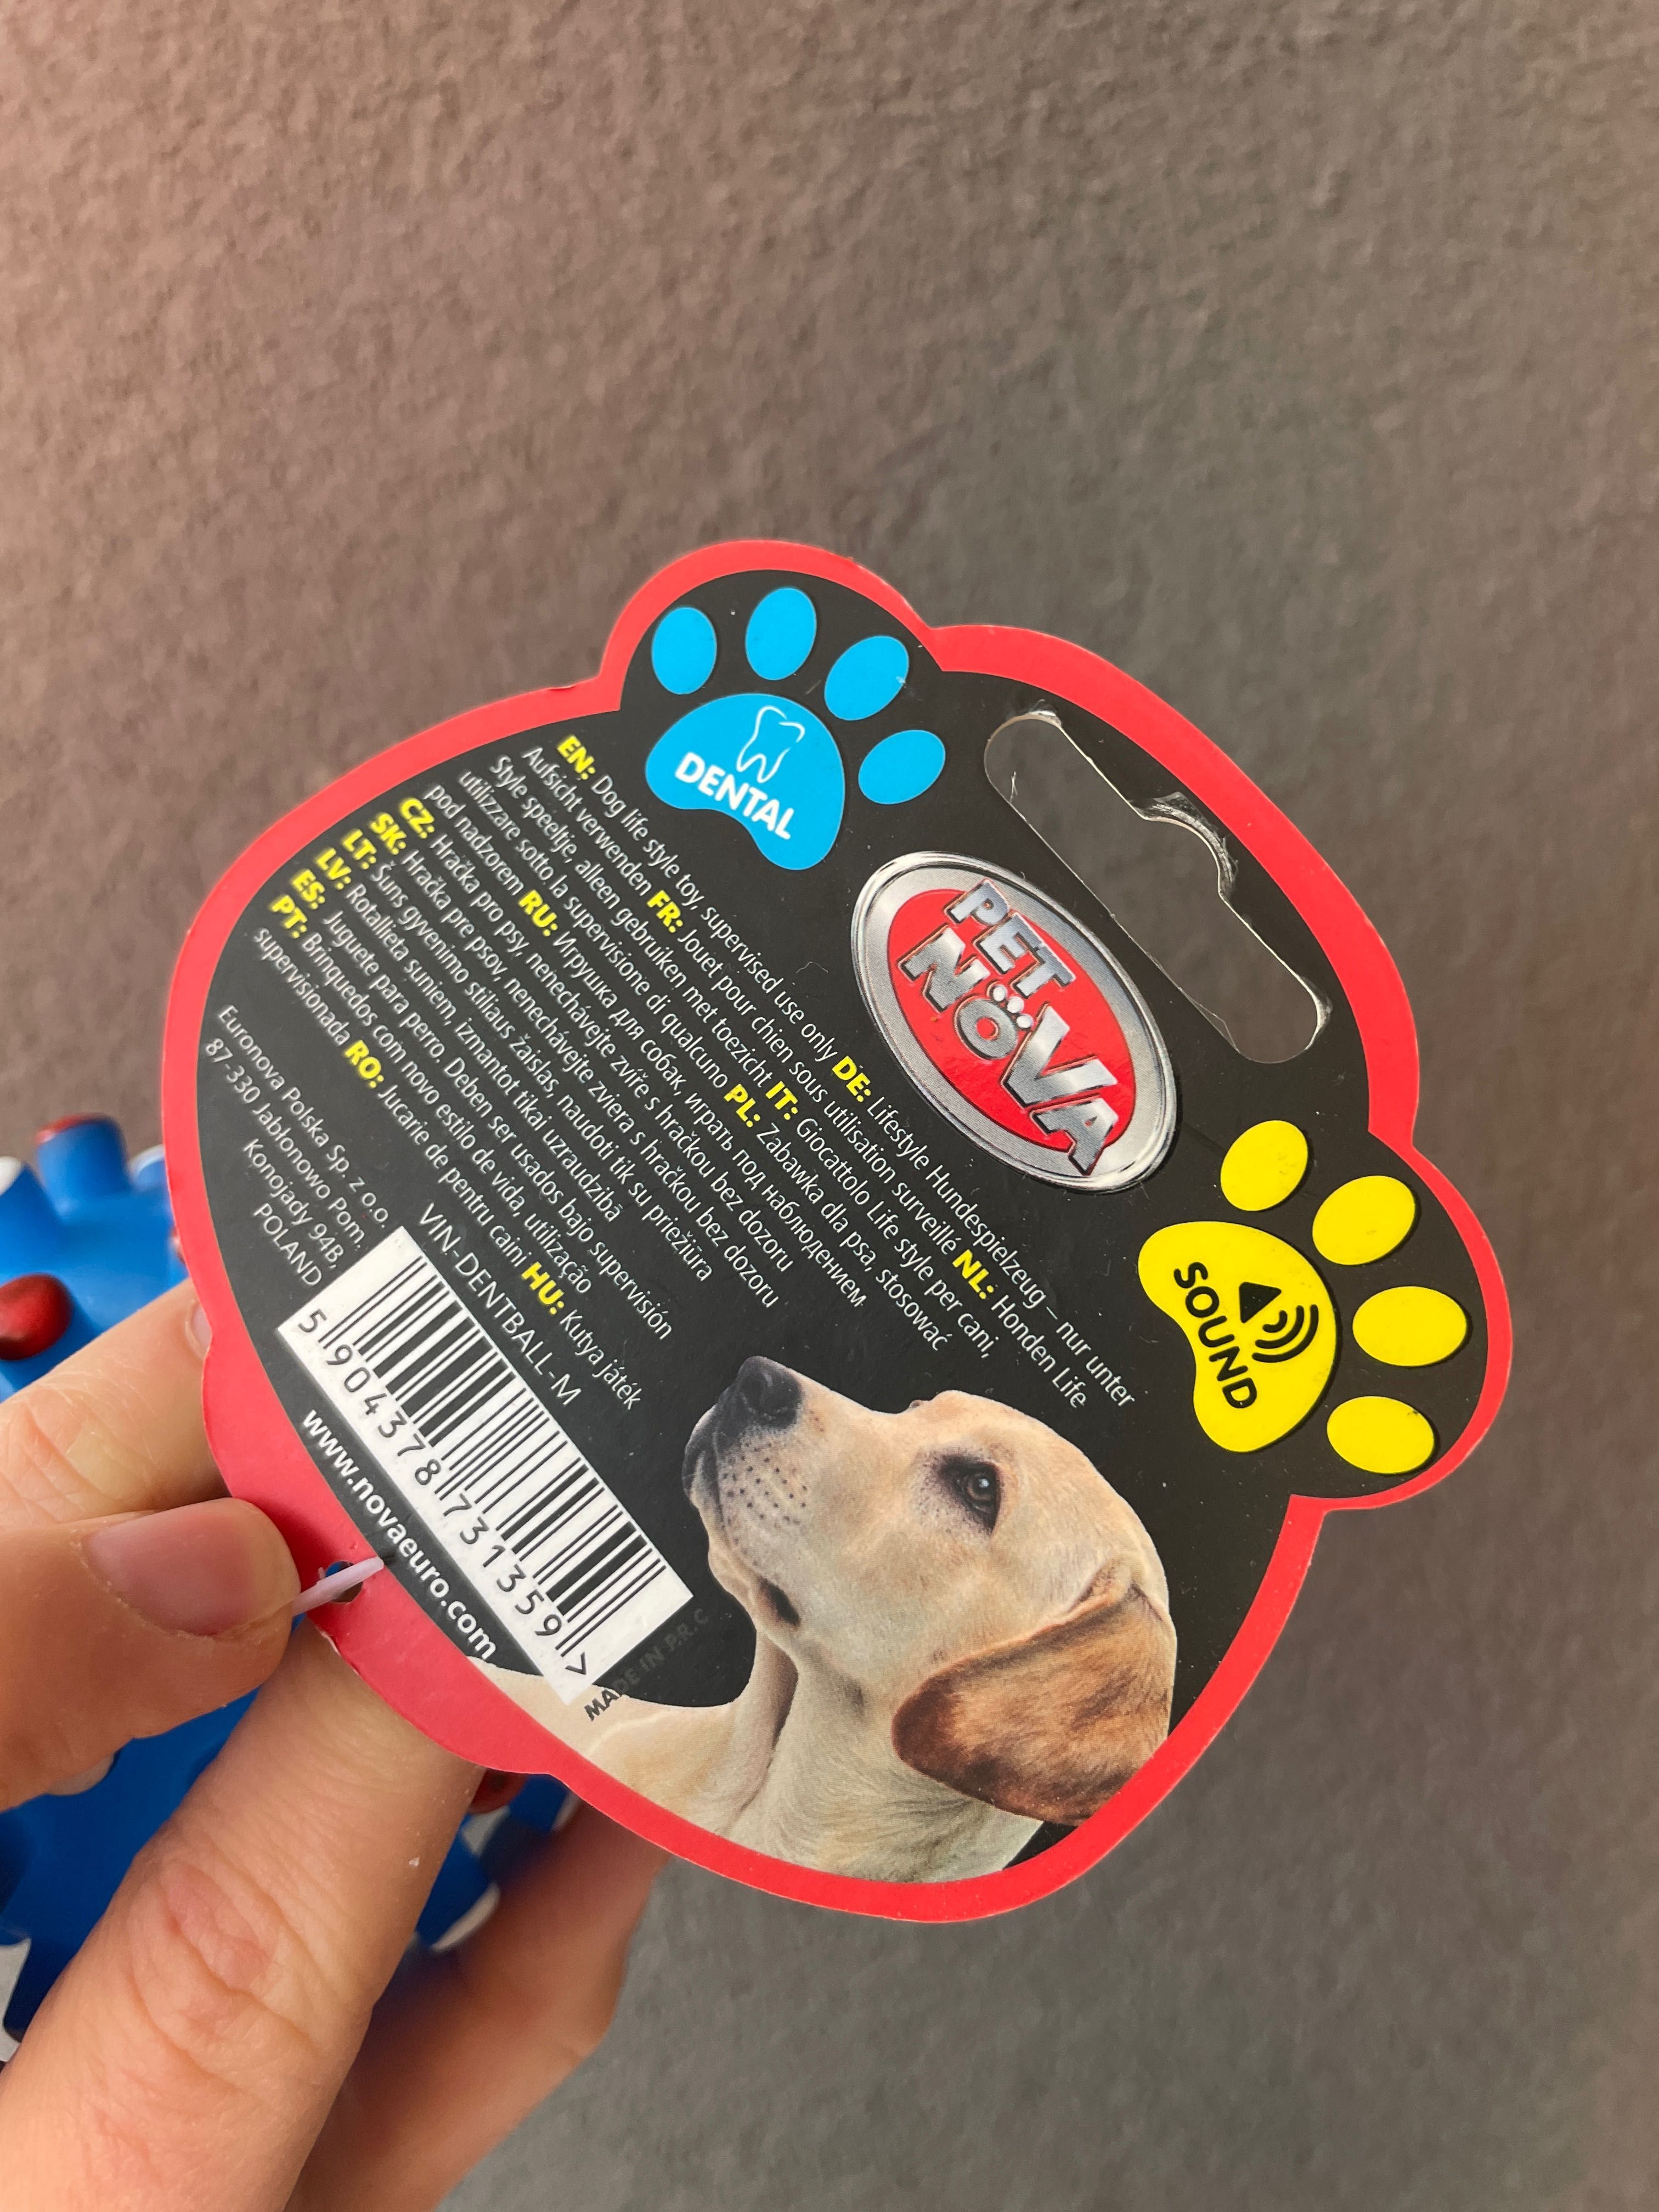 Piłka jeżowa dla psa "Pet Nova"